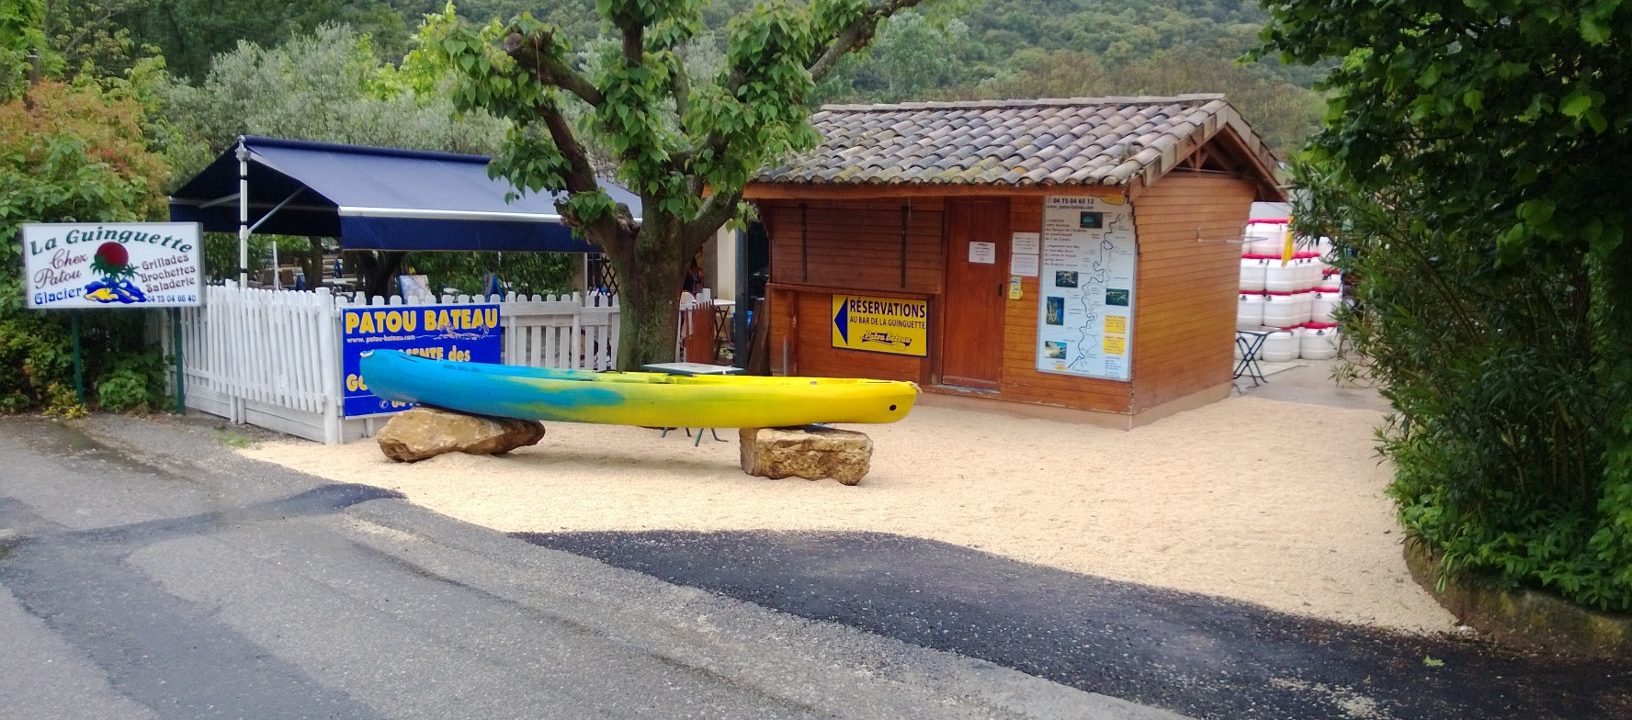 Canoë-Kayak "Patou Bateau"